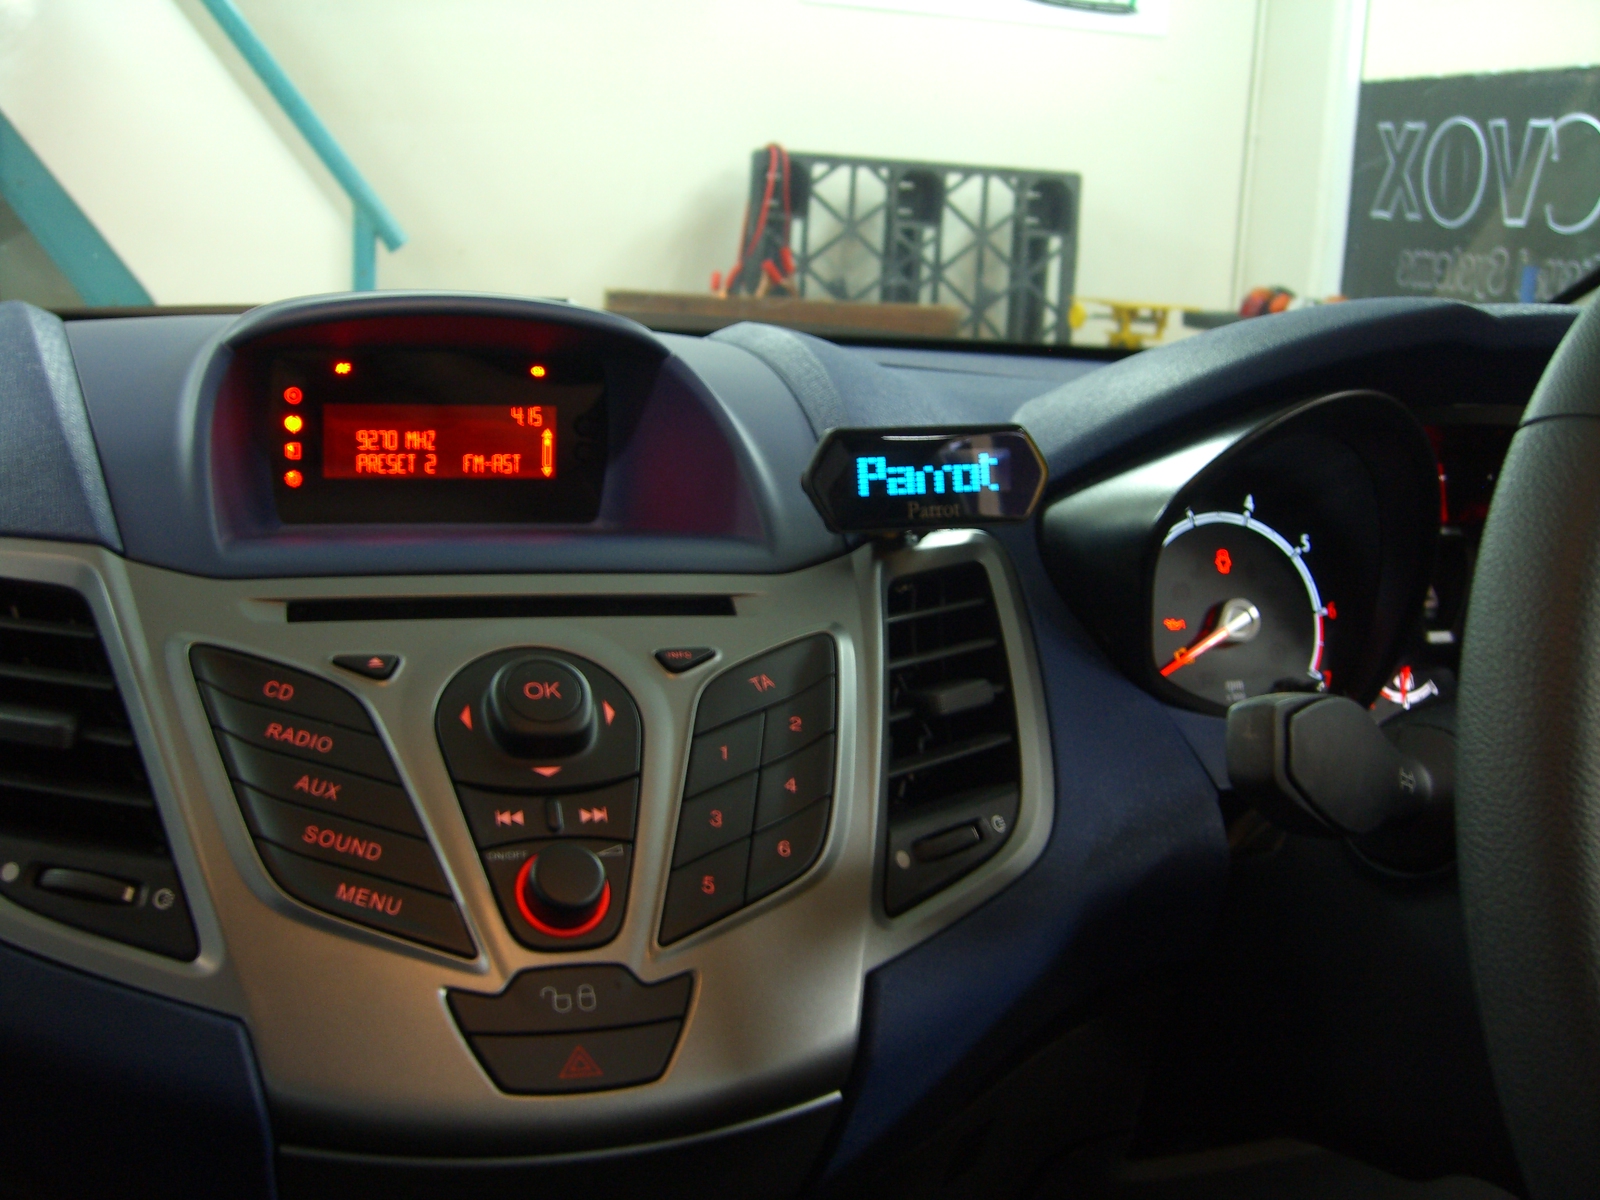 Ford Fiesta 2009 Parrot Bluetooth Handsfree, iPod iPhone, USB & AUX Input